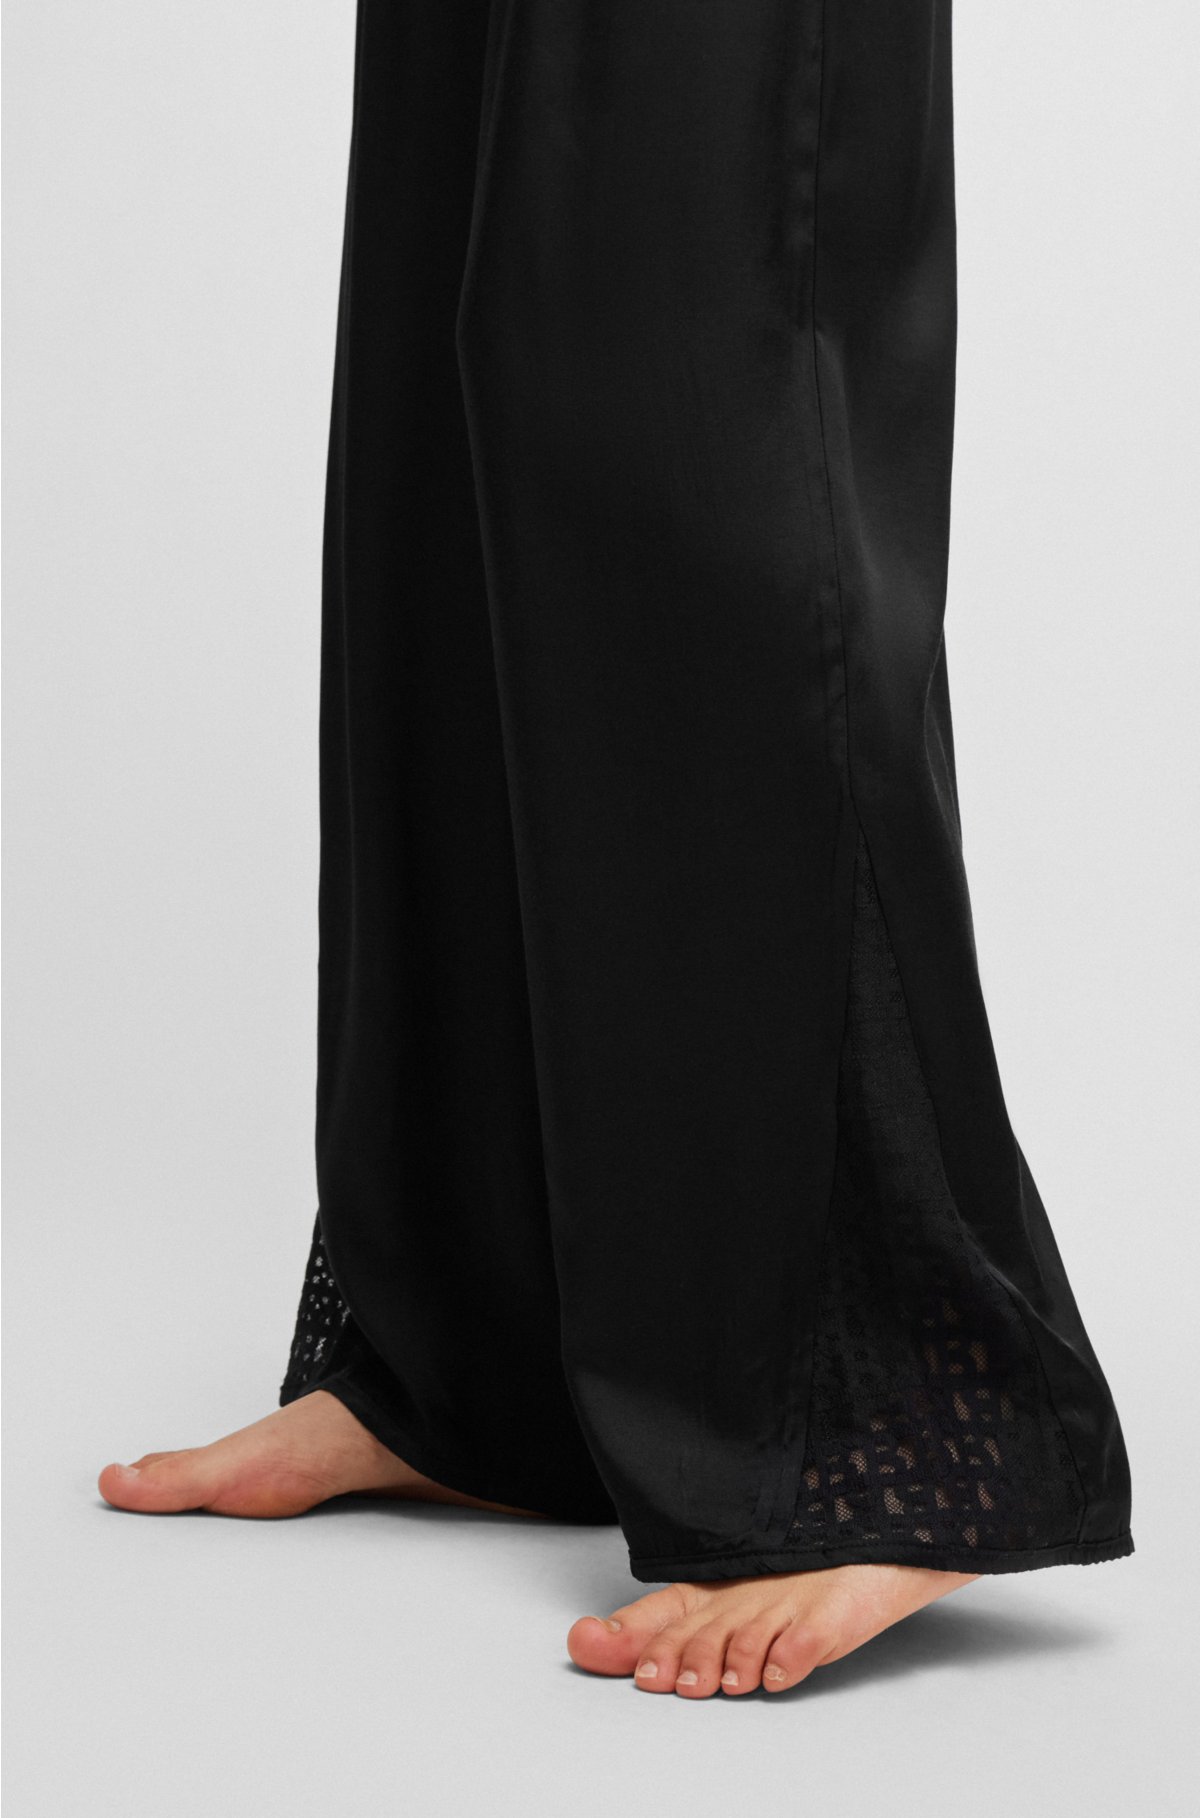 Satin pyjama bottoms with monogram insert detail, Black